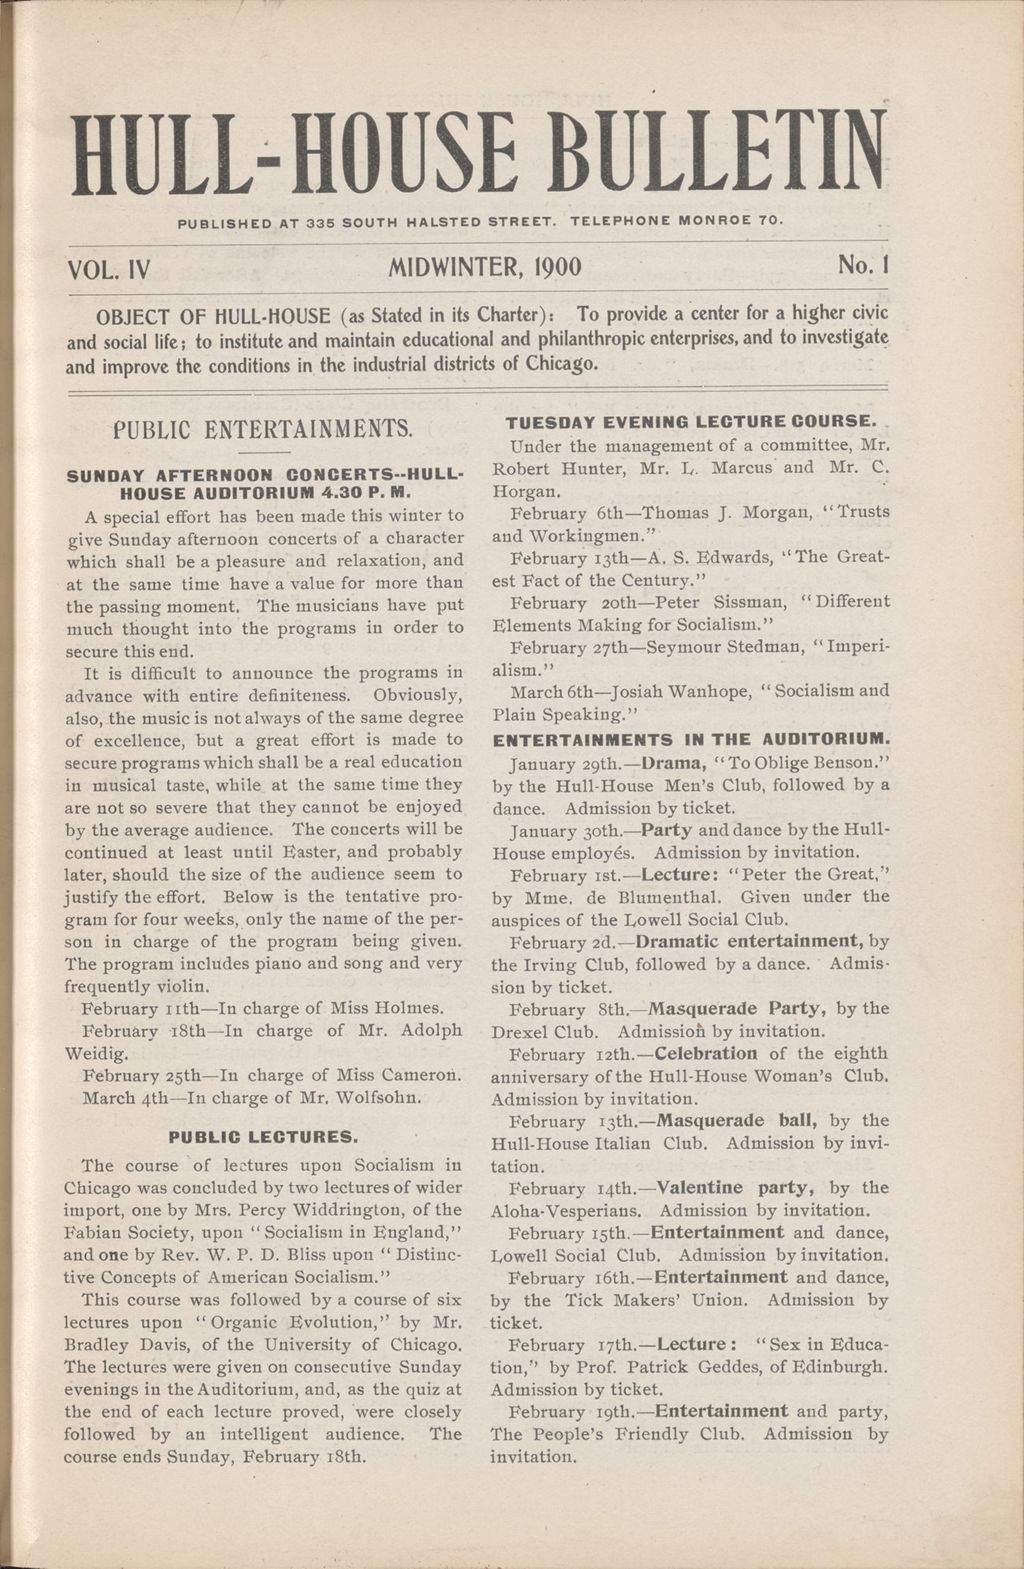 Hull-House Bulletin, vol. 4, no.1, 1900: midwinter